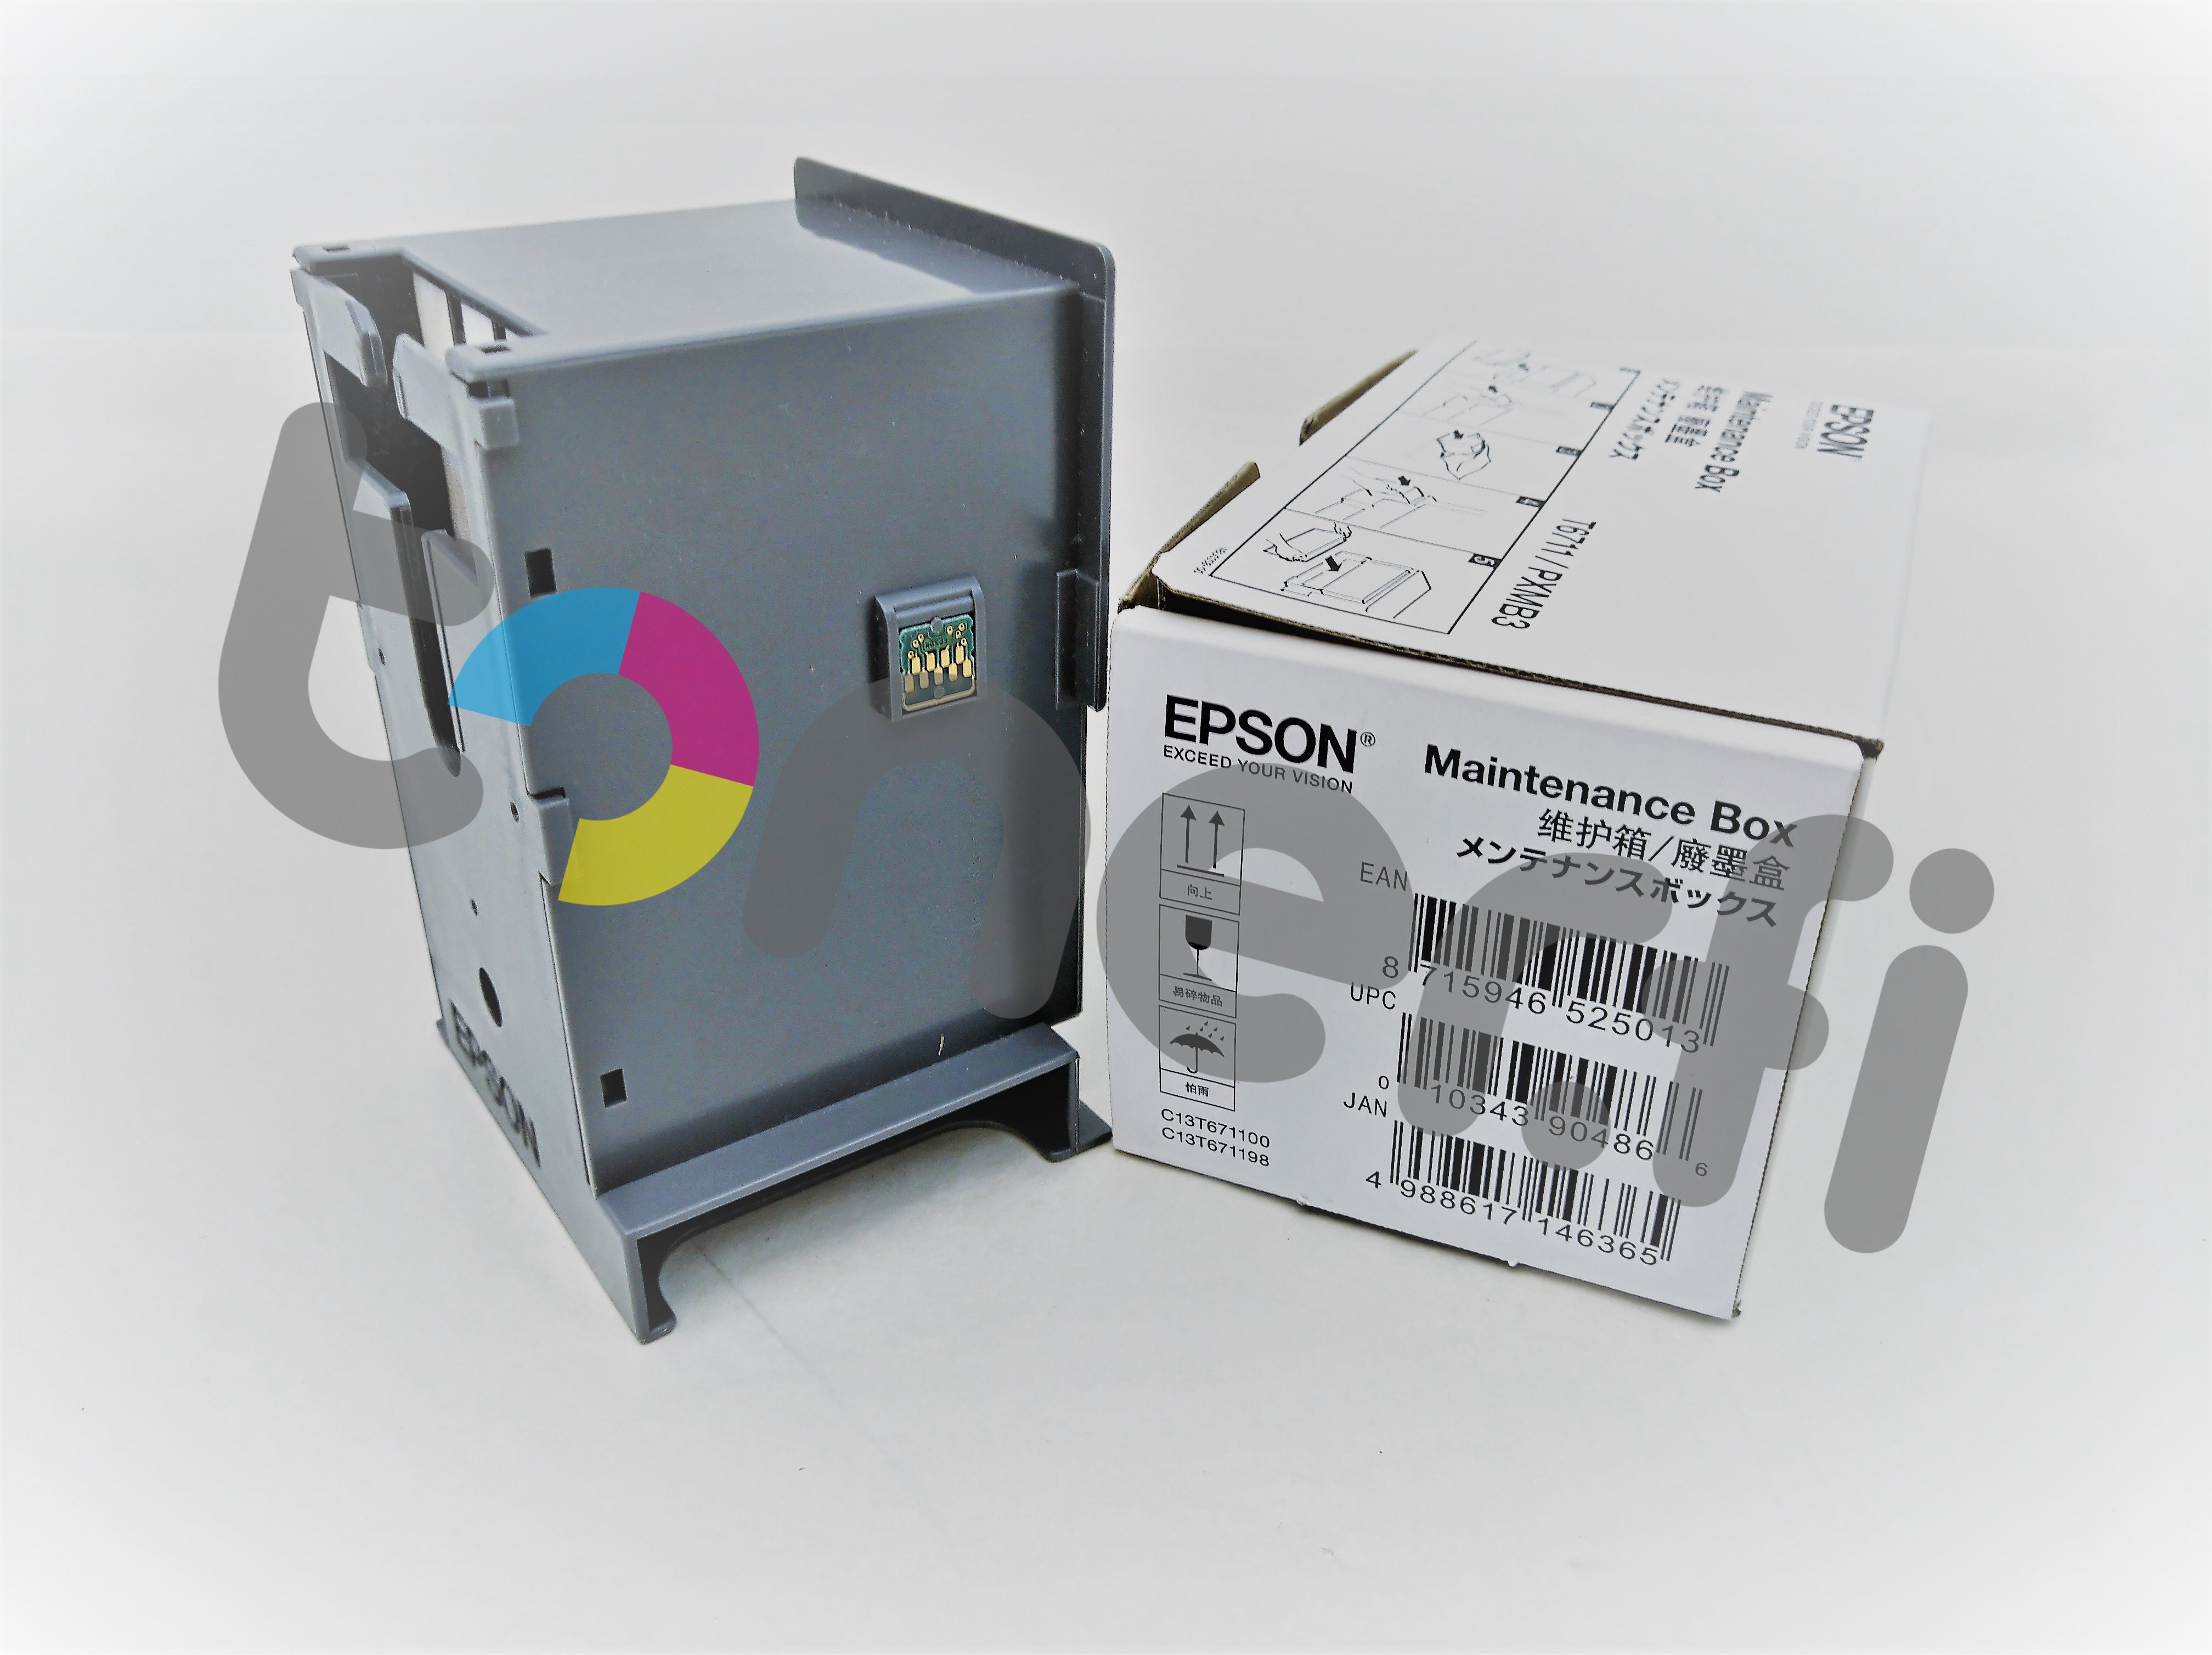 Epson C13T671100 Maintenance Box